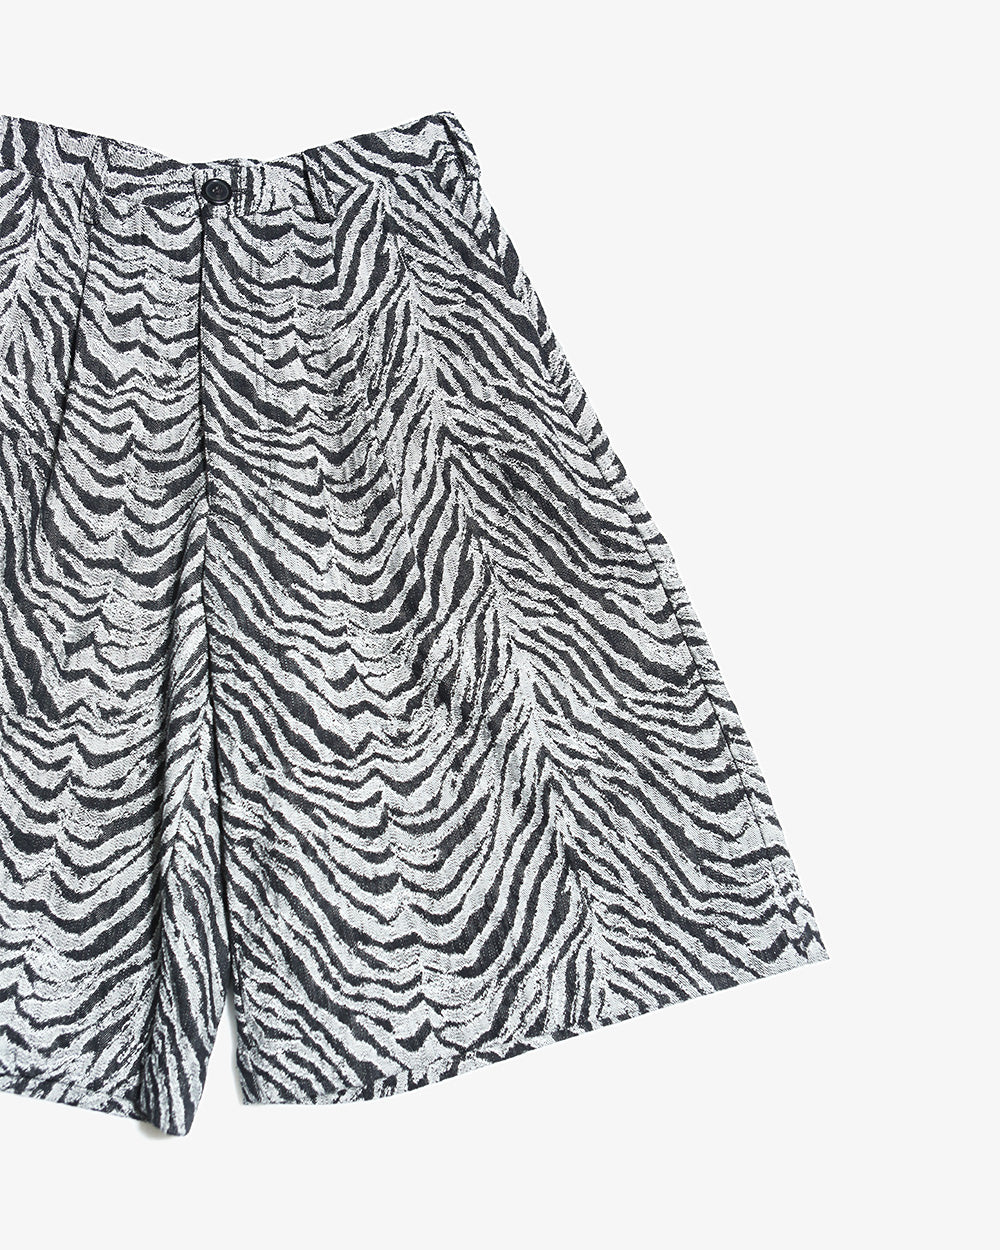 Tiger Jacquard Shorts